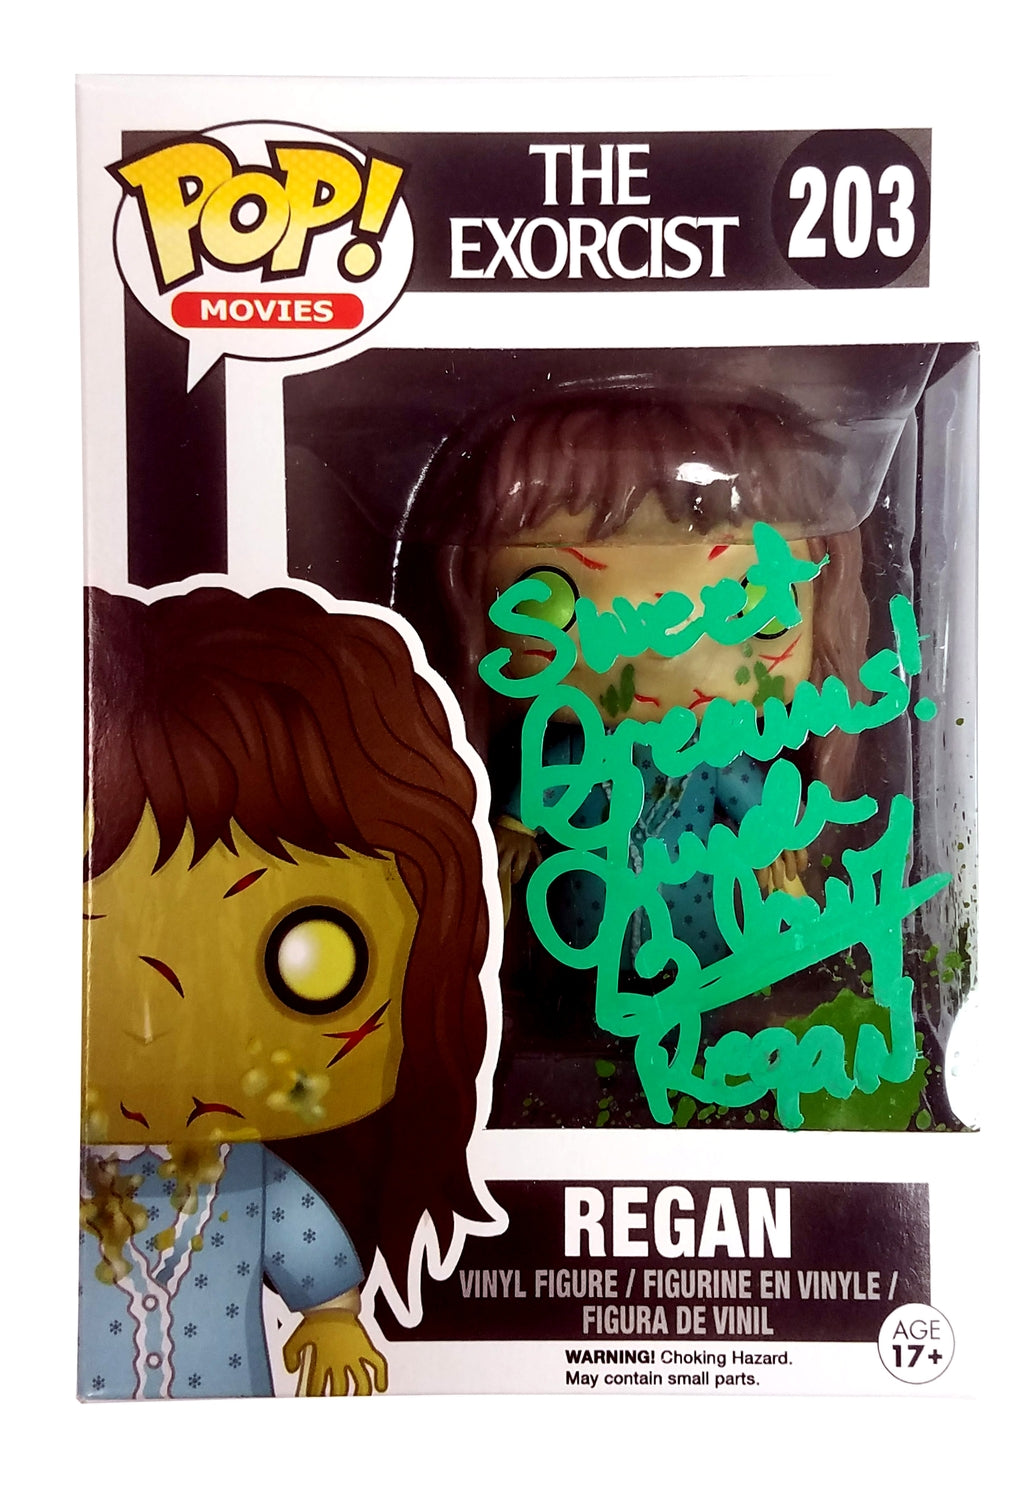 Linda Blair Autographed The Exorcist Funko Pop! #203 Regan ACOA Witness ITP